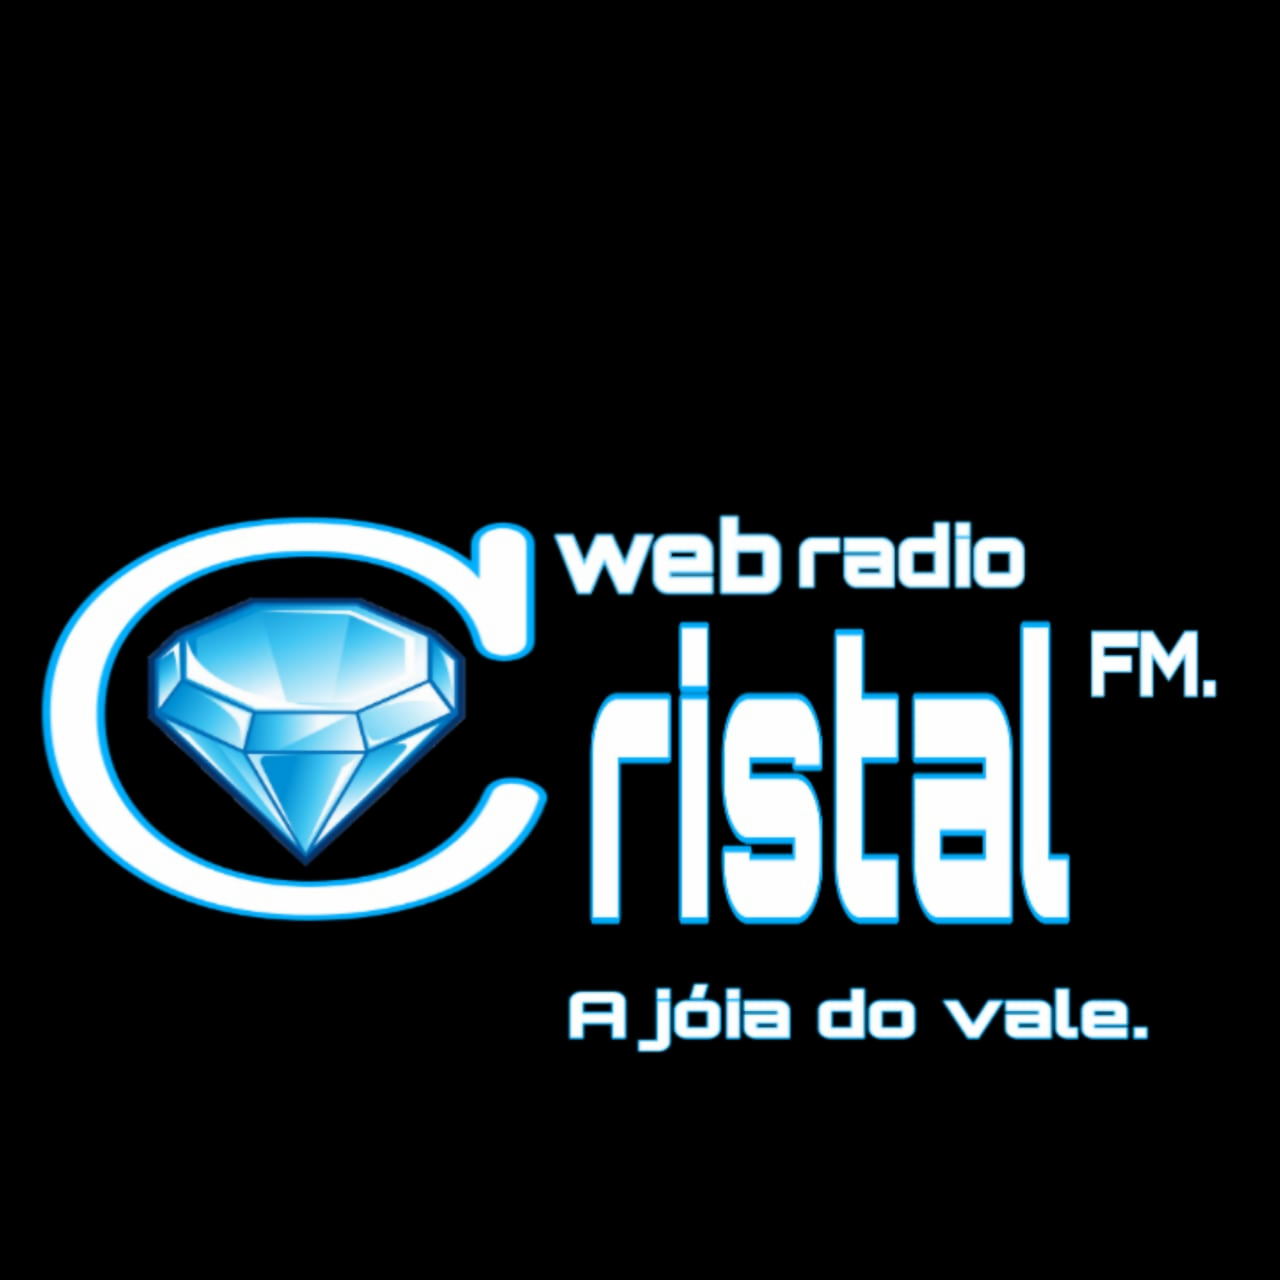 web radio cristal fm